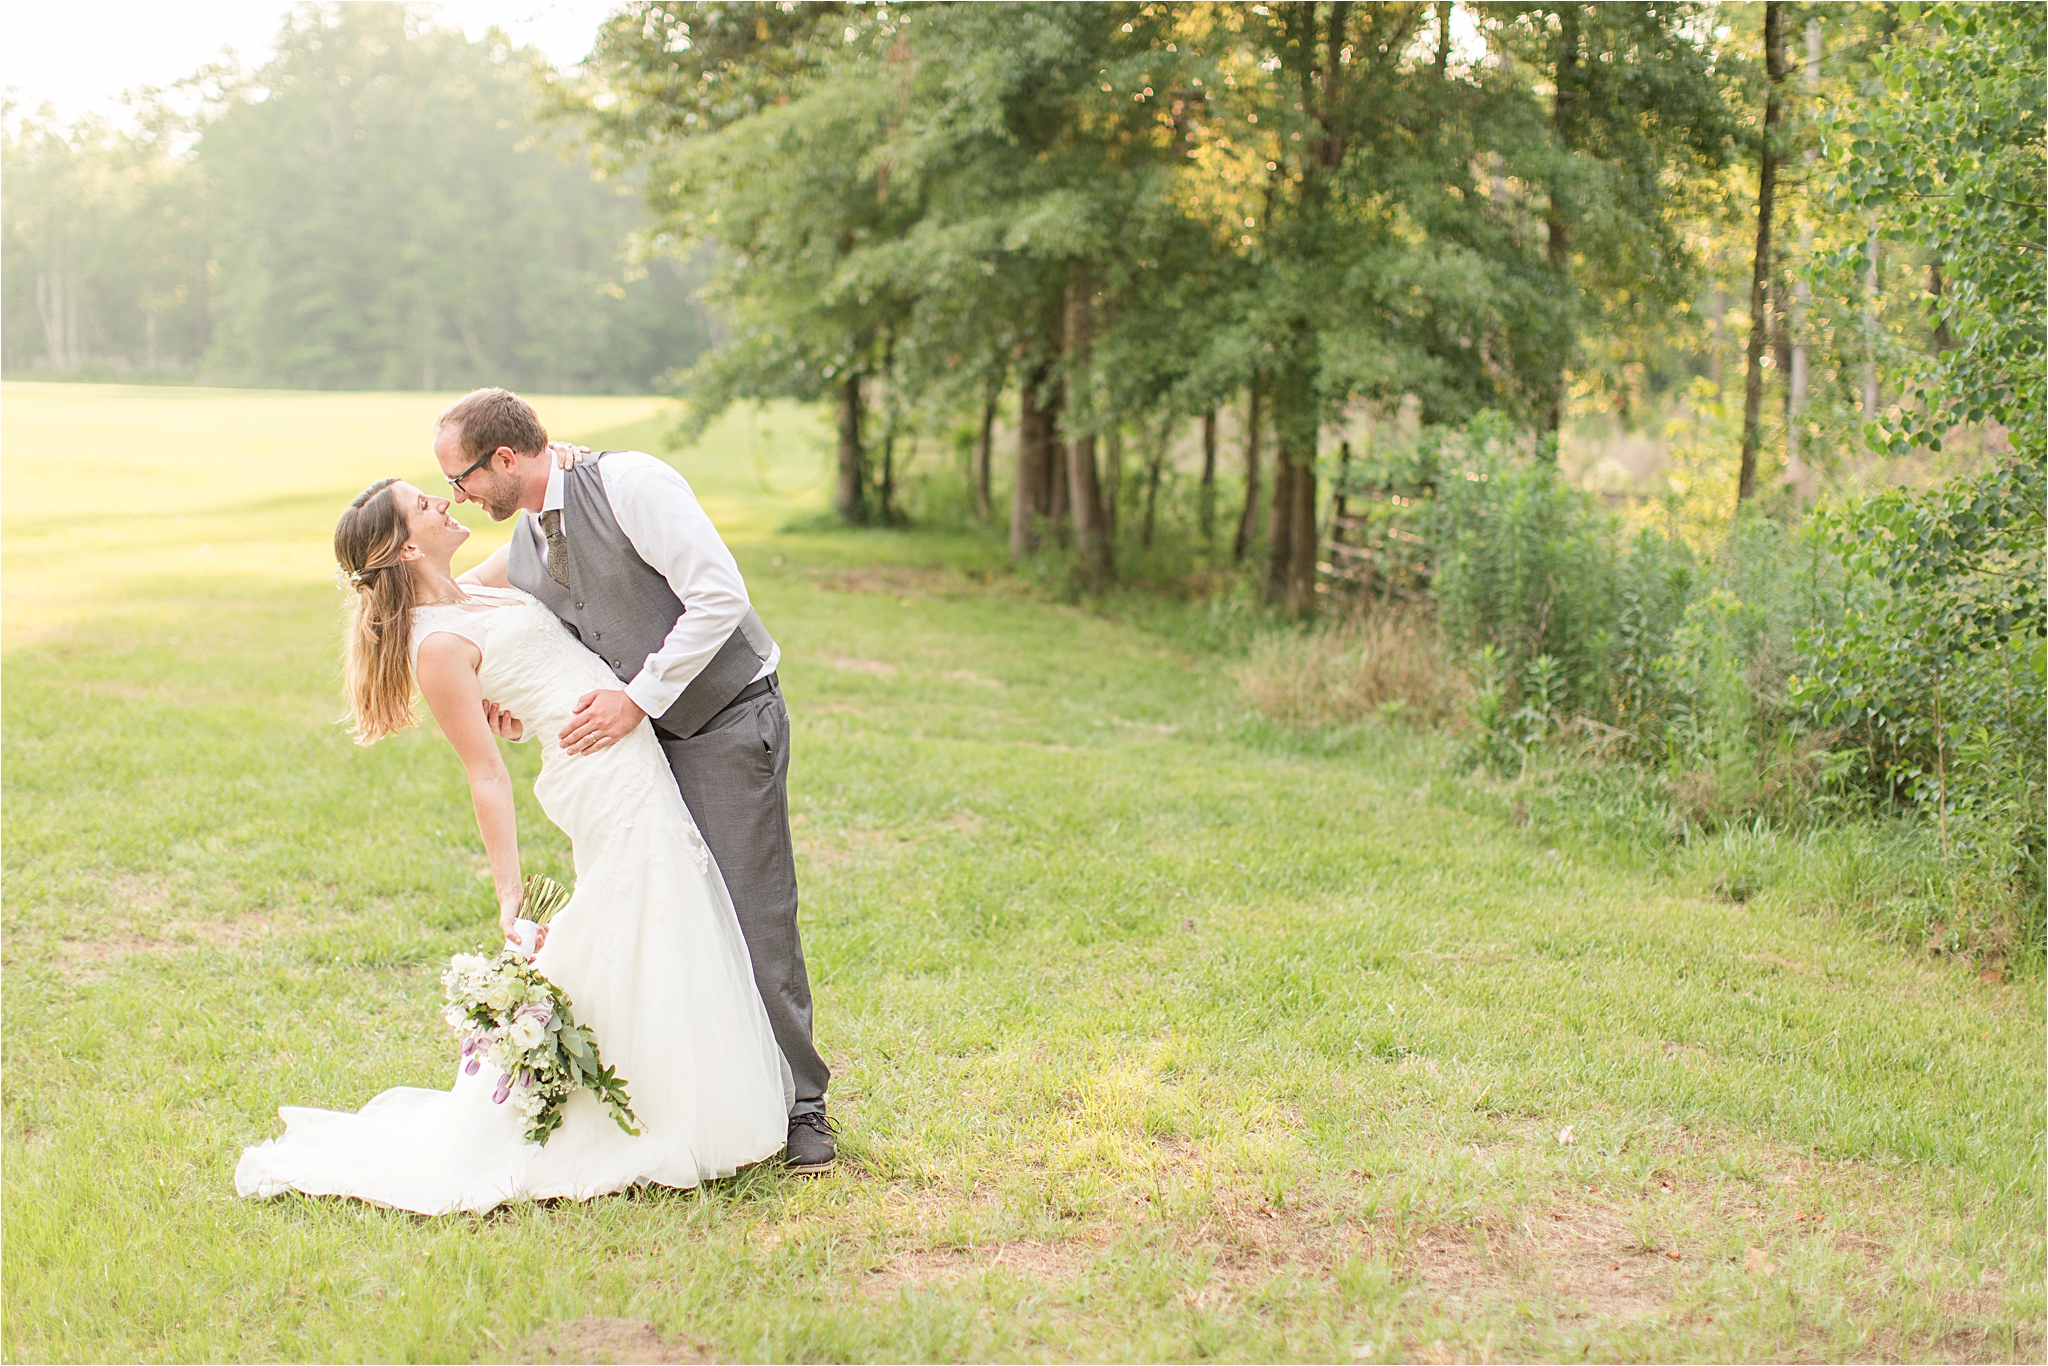 Backyard Wedding in the Country | Mandy + Greg